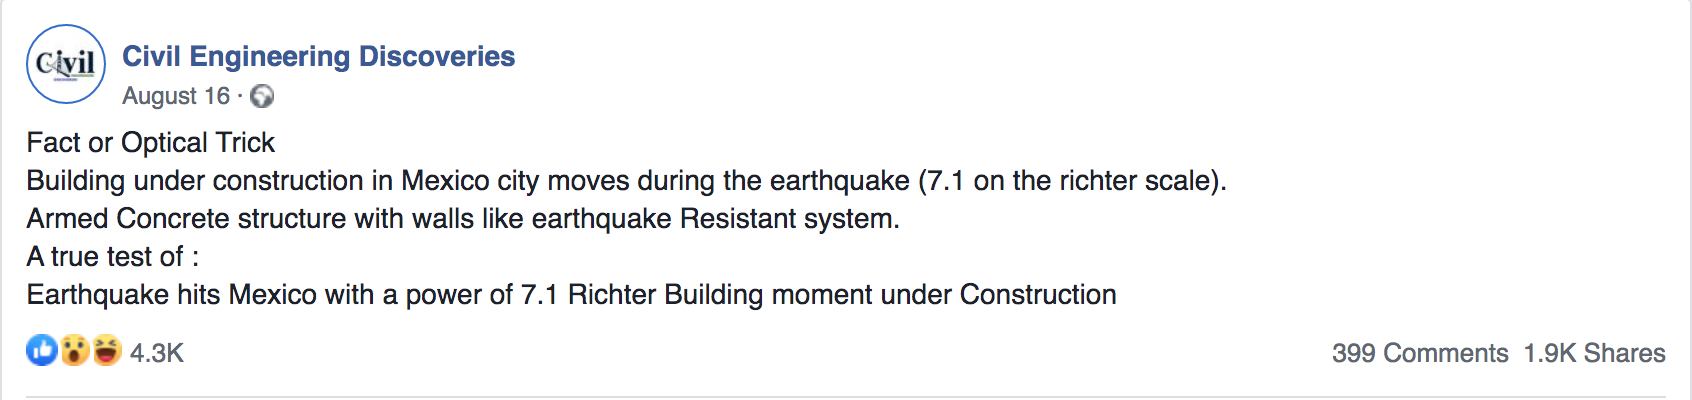 gokdelenin izmir depreminden oldugu iddiasi 4